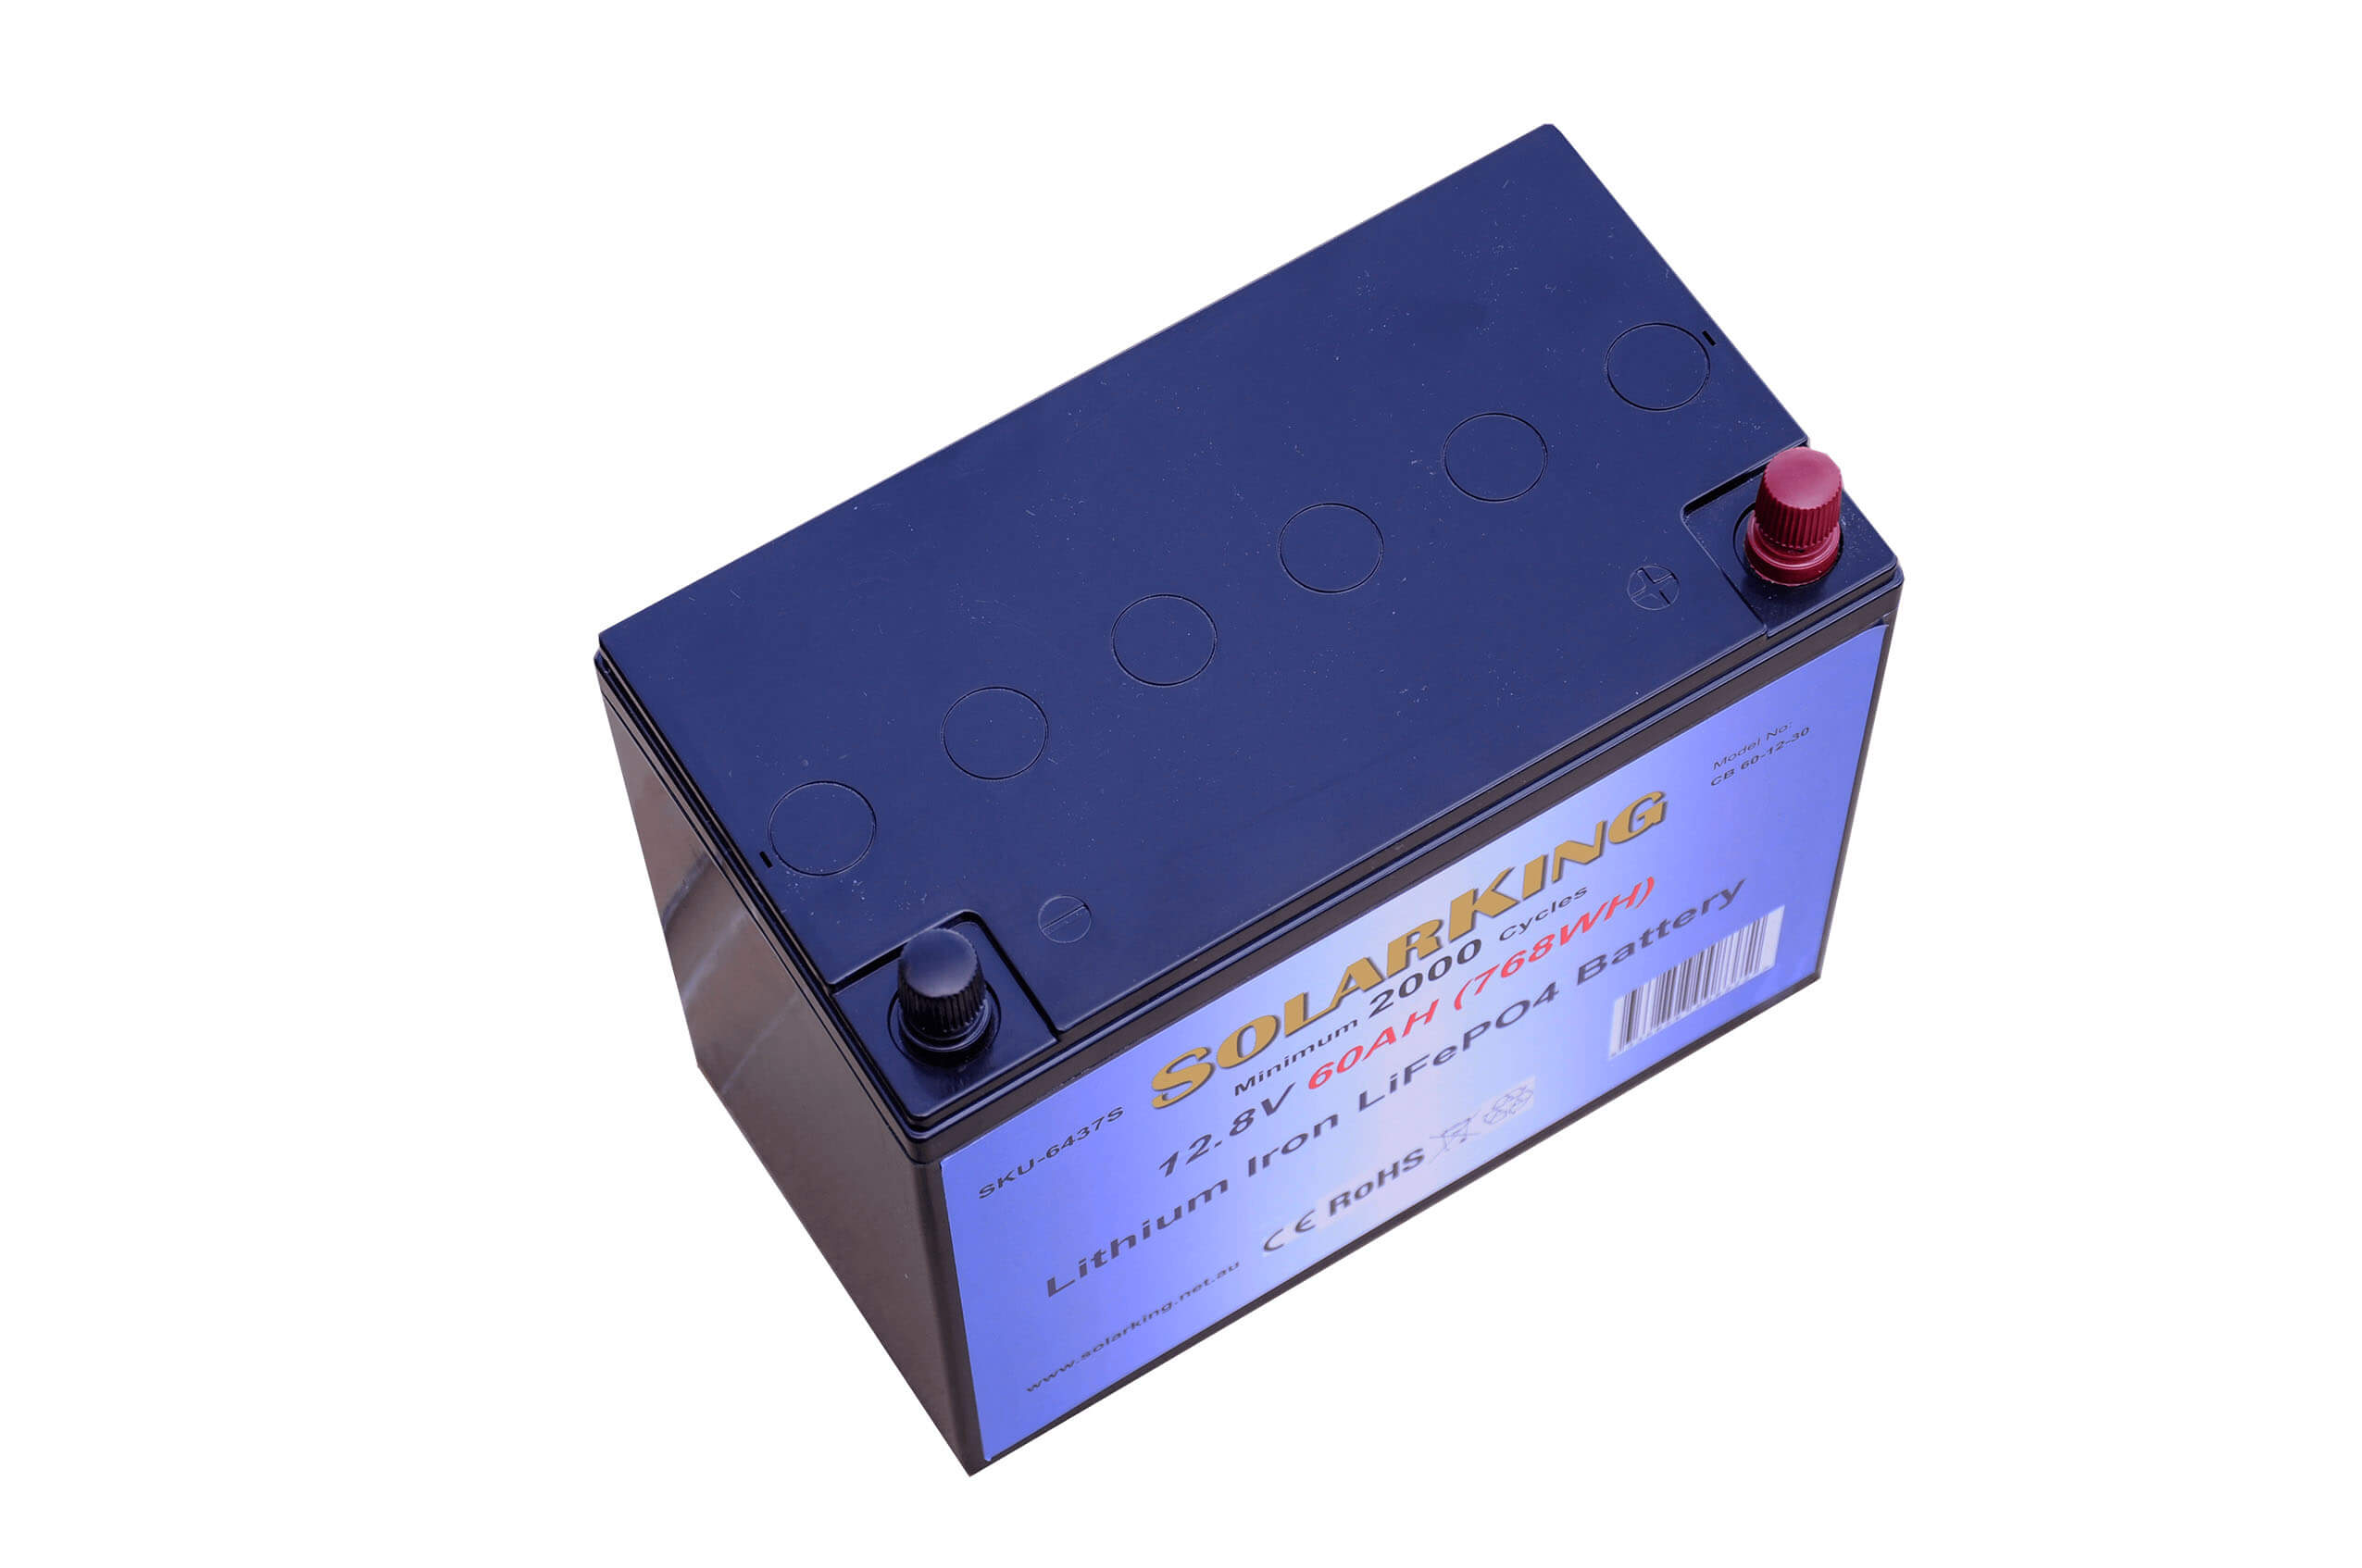 60AH Lithium Iron SolarKing Battery CB-60-12-30